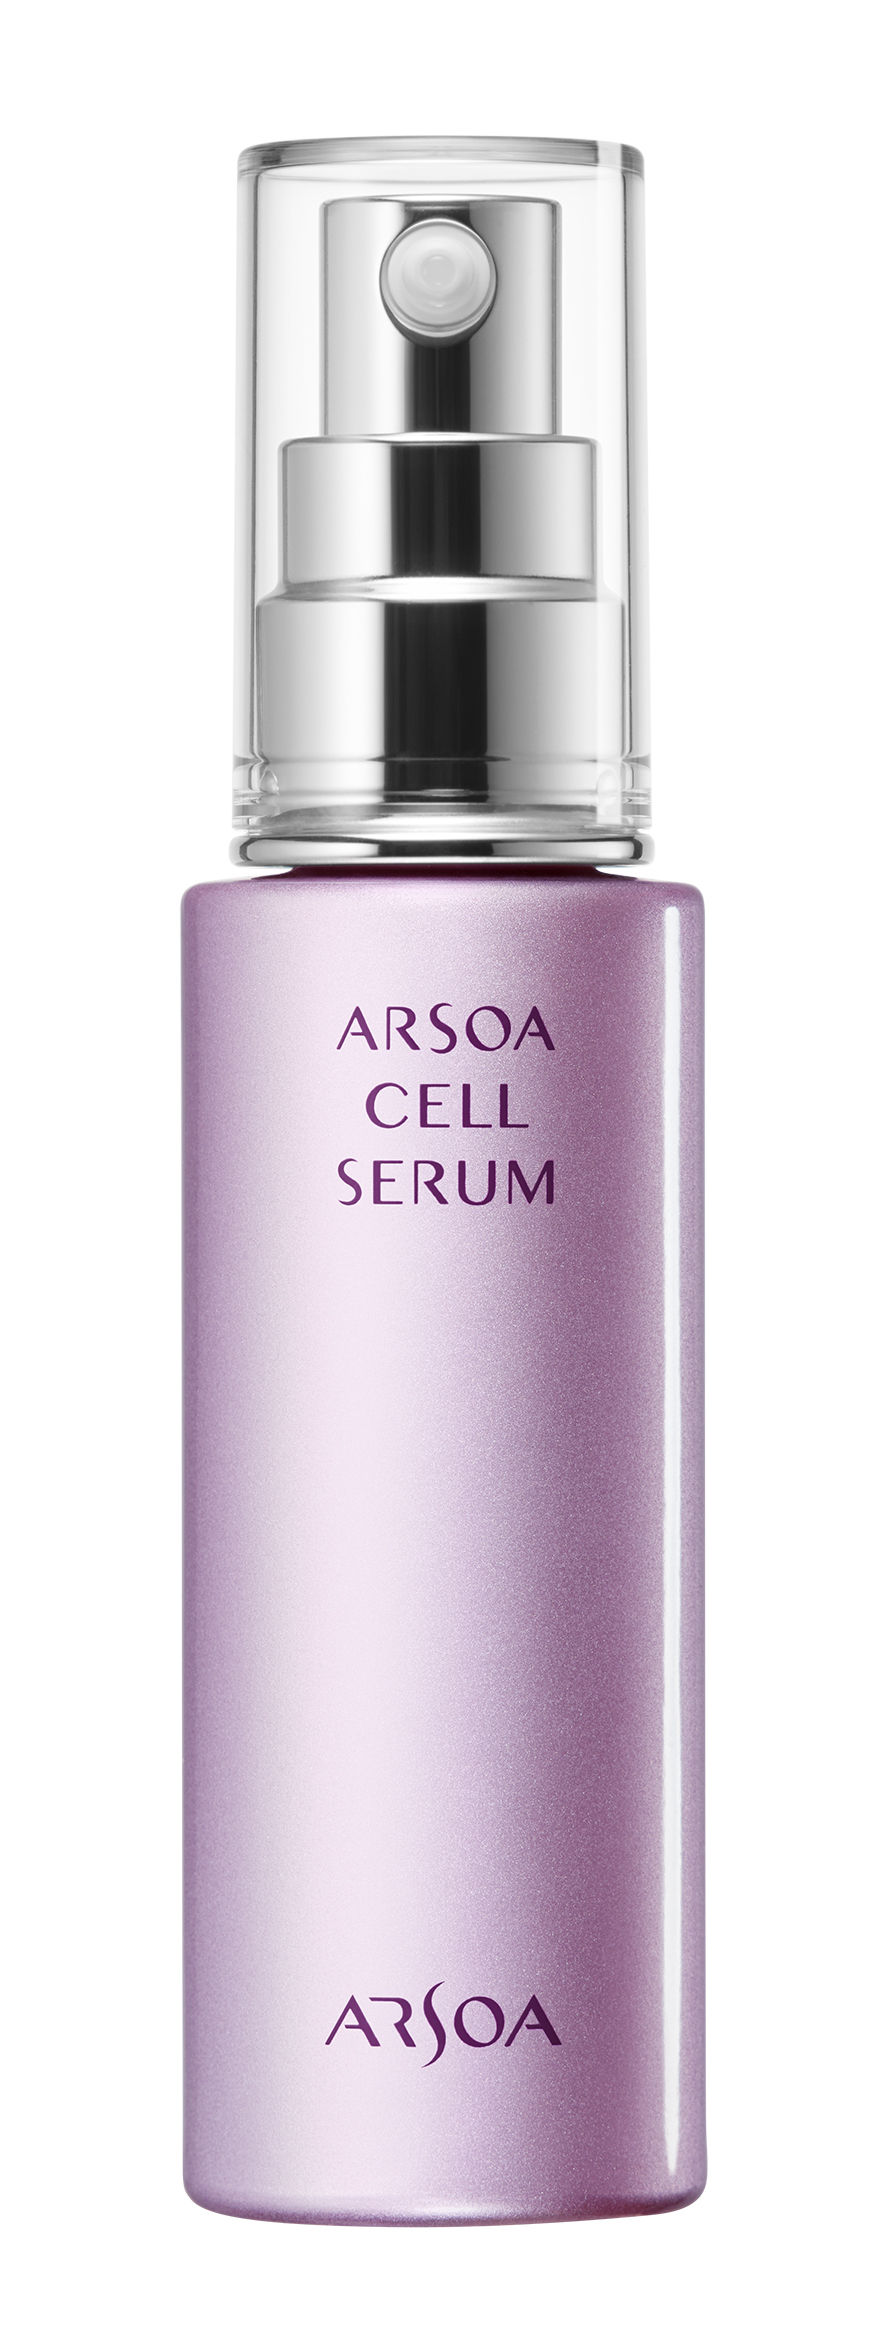 ARSOA CELL SERUM (Beauty Lotion)